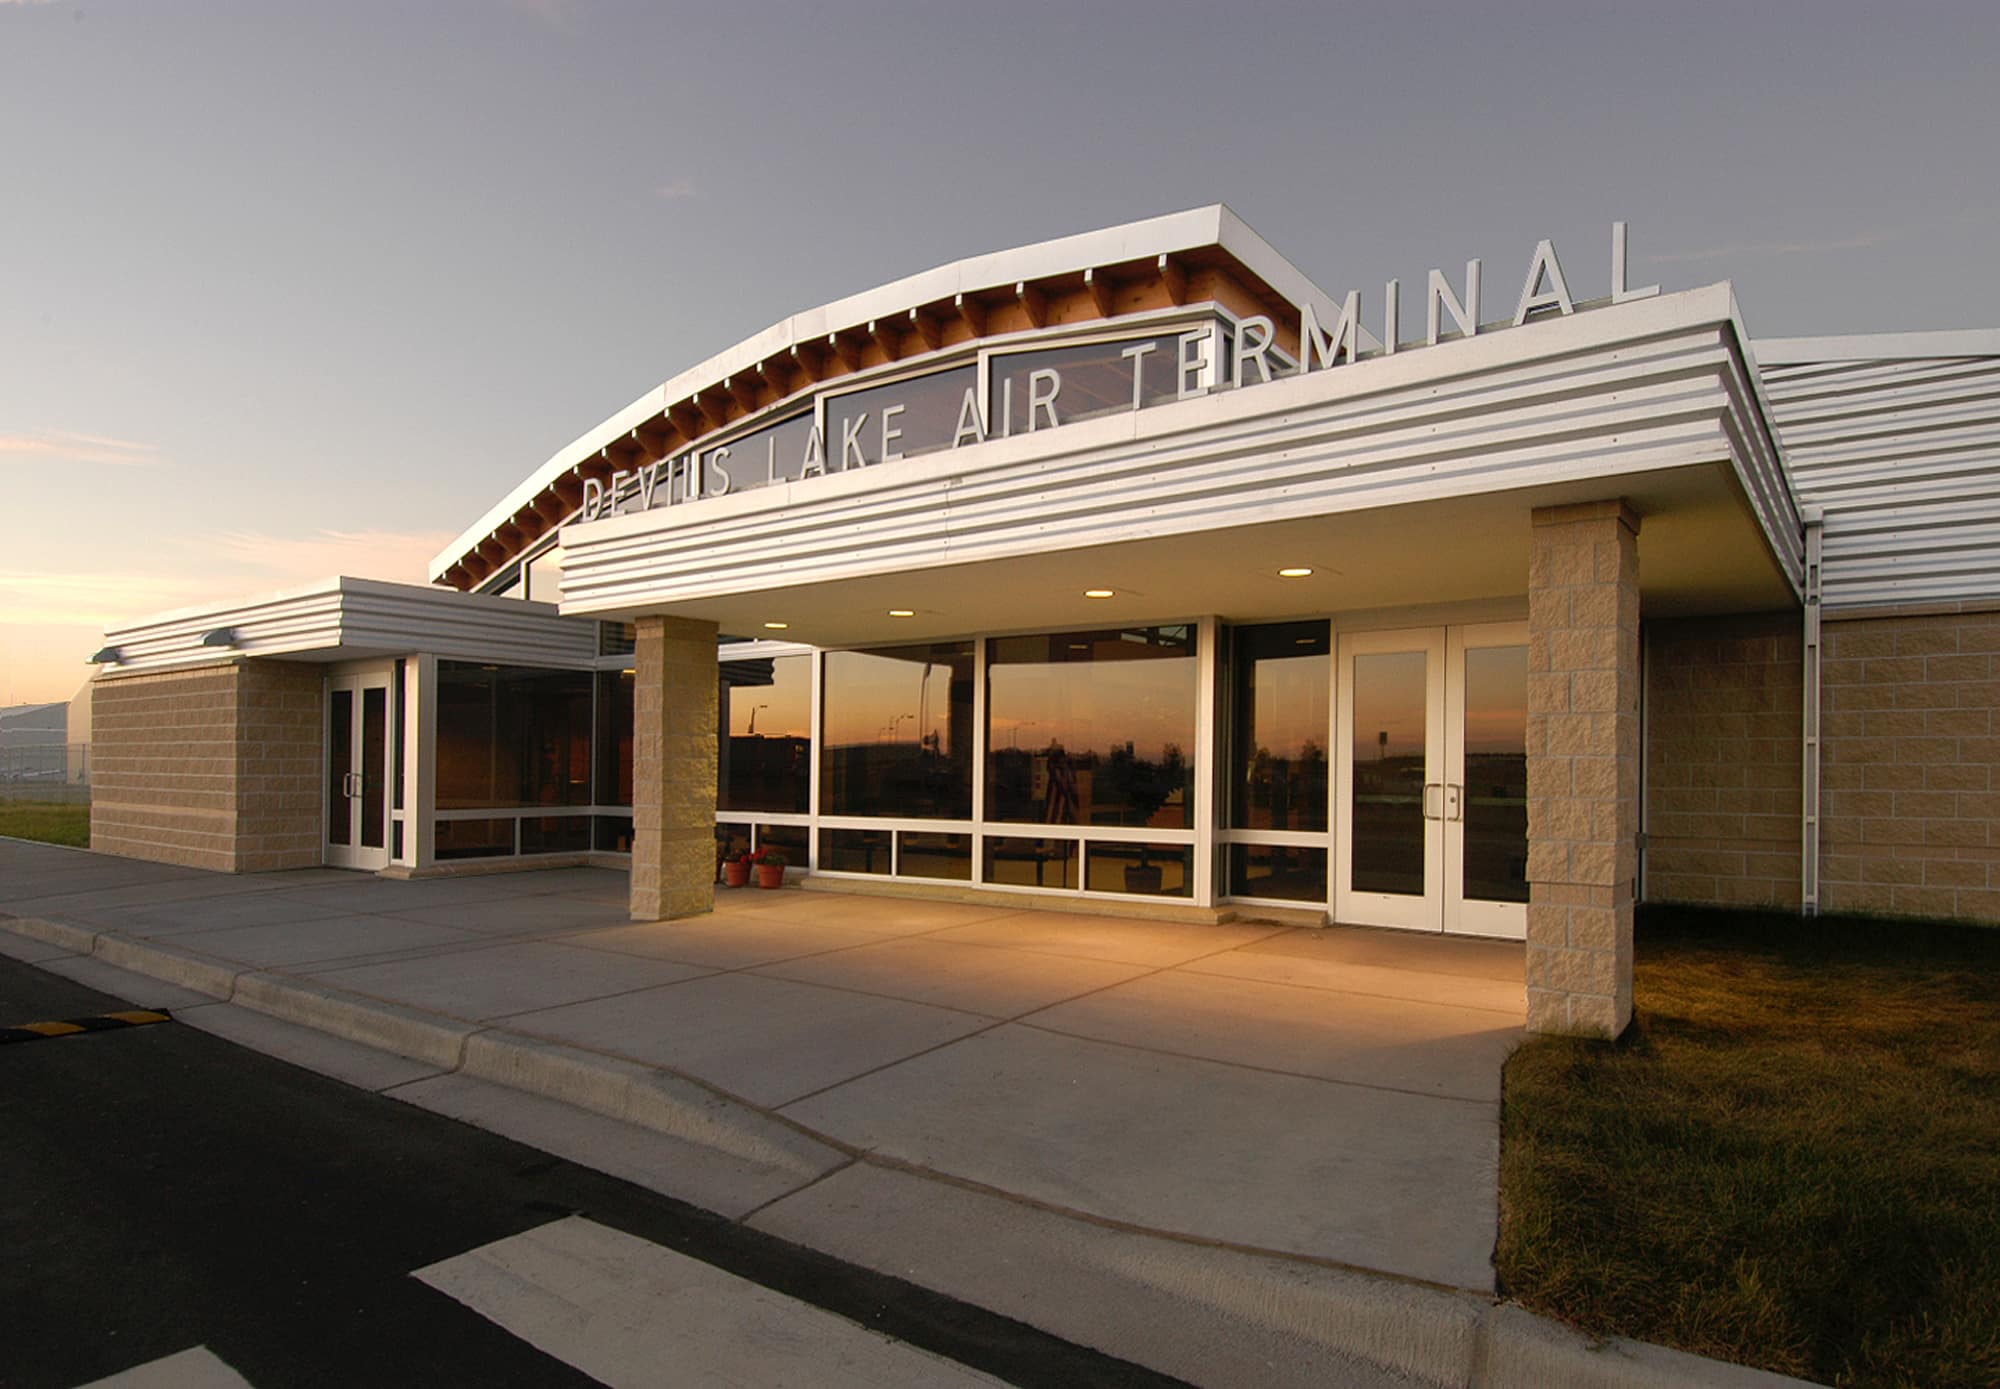 Devils Lake Air Terminal